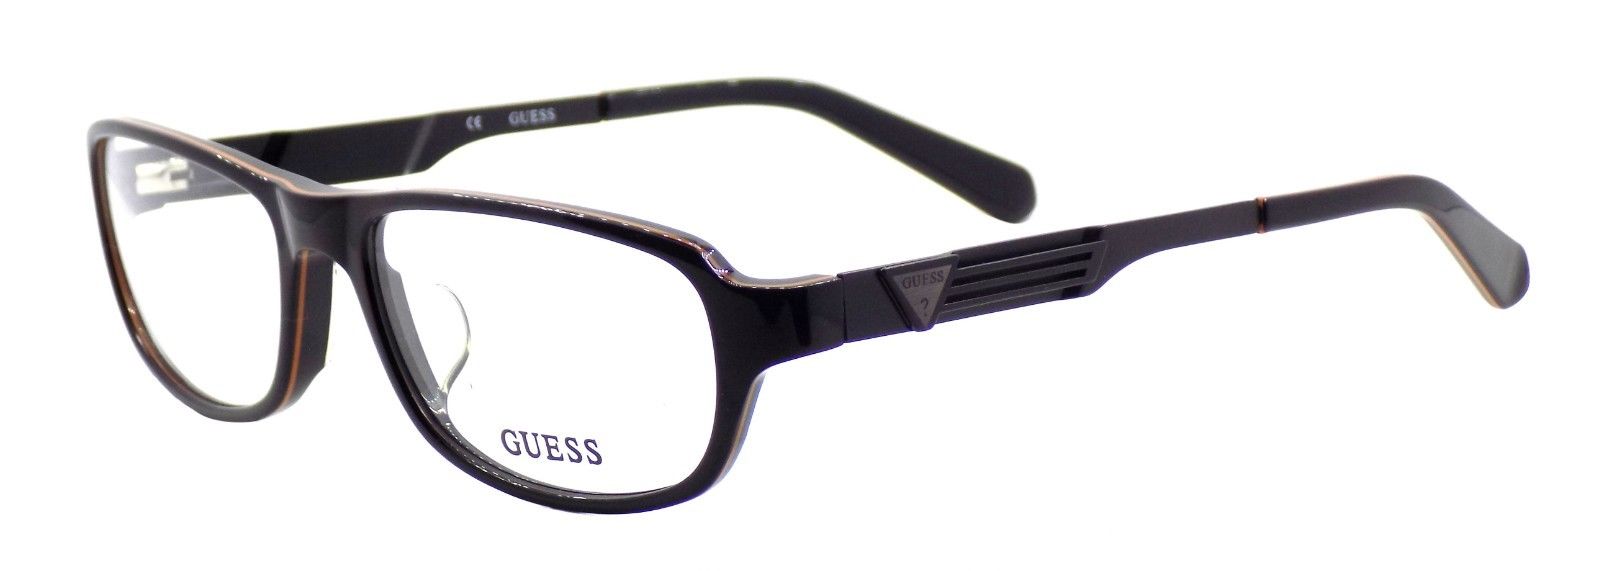 1-GUESS GUA1779 BLK Men's ASIAN Fit Eyeglasses Frames 55-17-145 Black + CASE-715583723894-IKSpecs